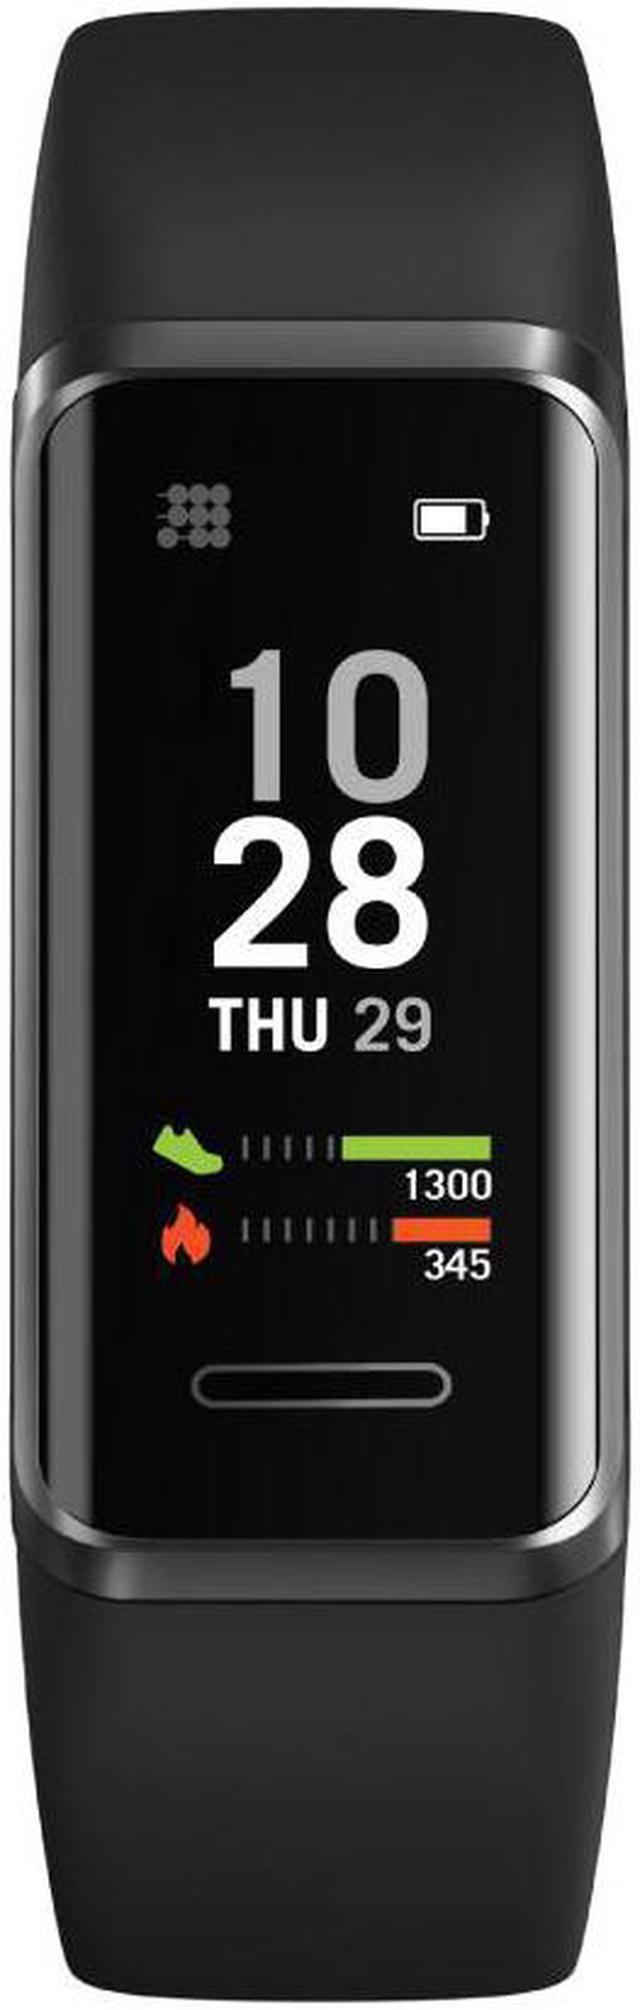 Cubitt CT4 GPS Smart Watch, Fitness Tracker with Built in GPS, Black -  Walmart.com